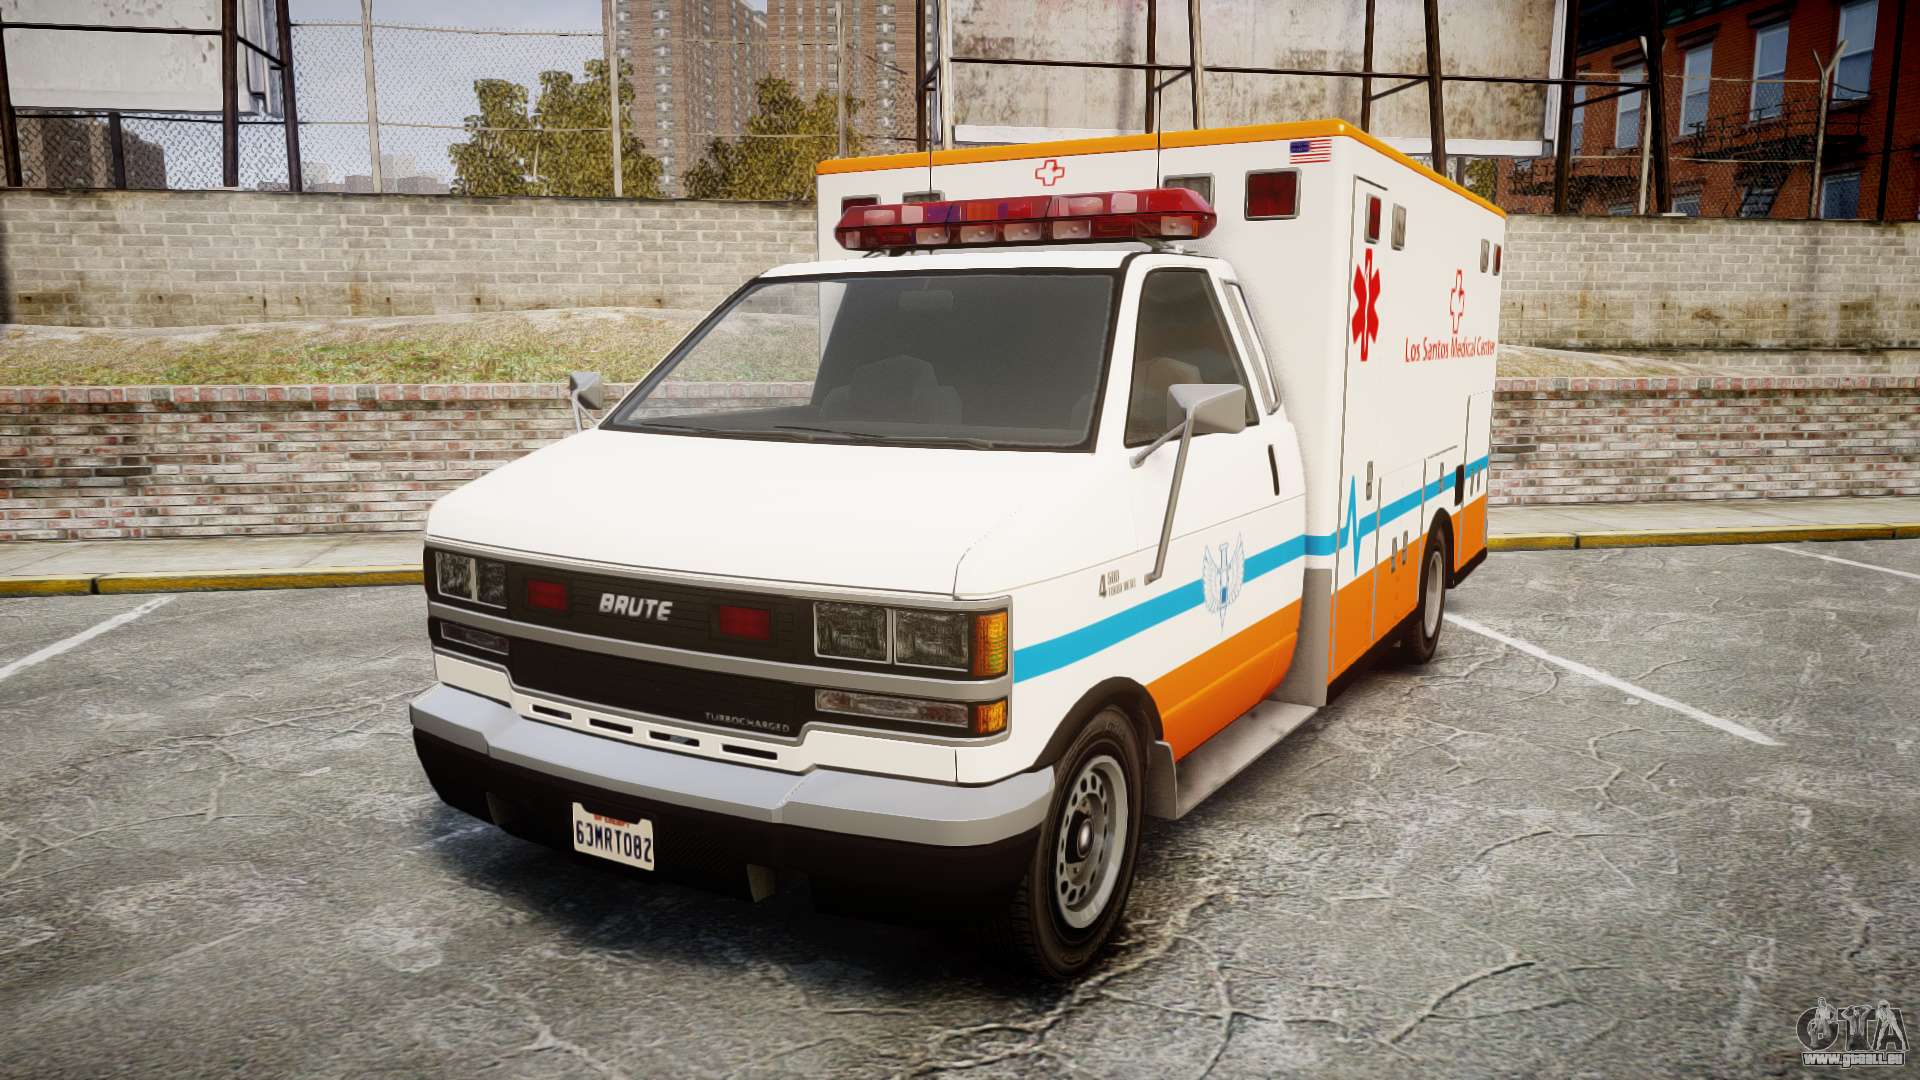 Real paramedics для gta 5 фото 66